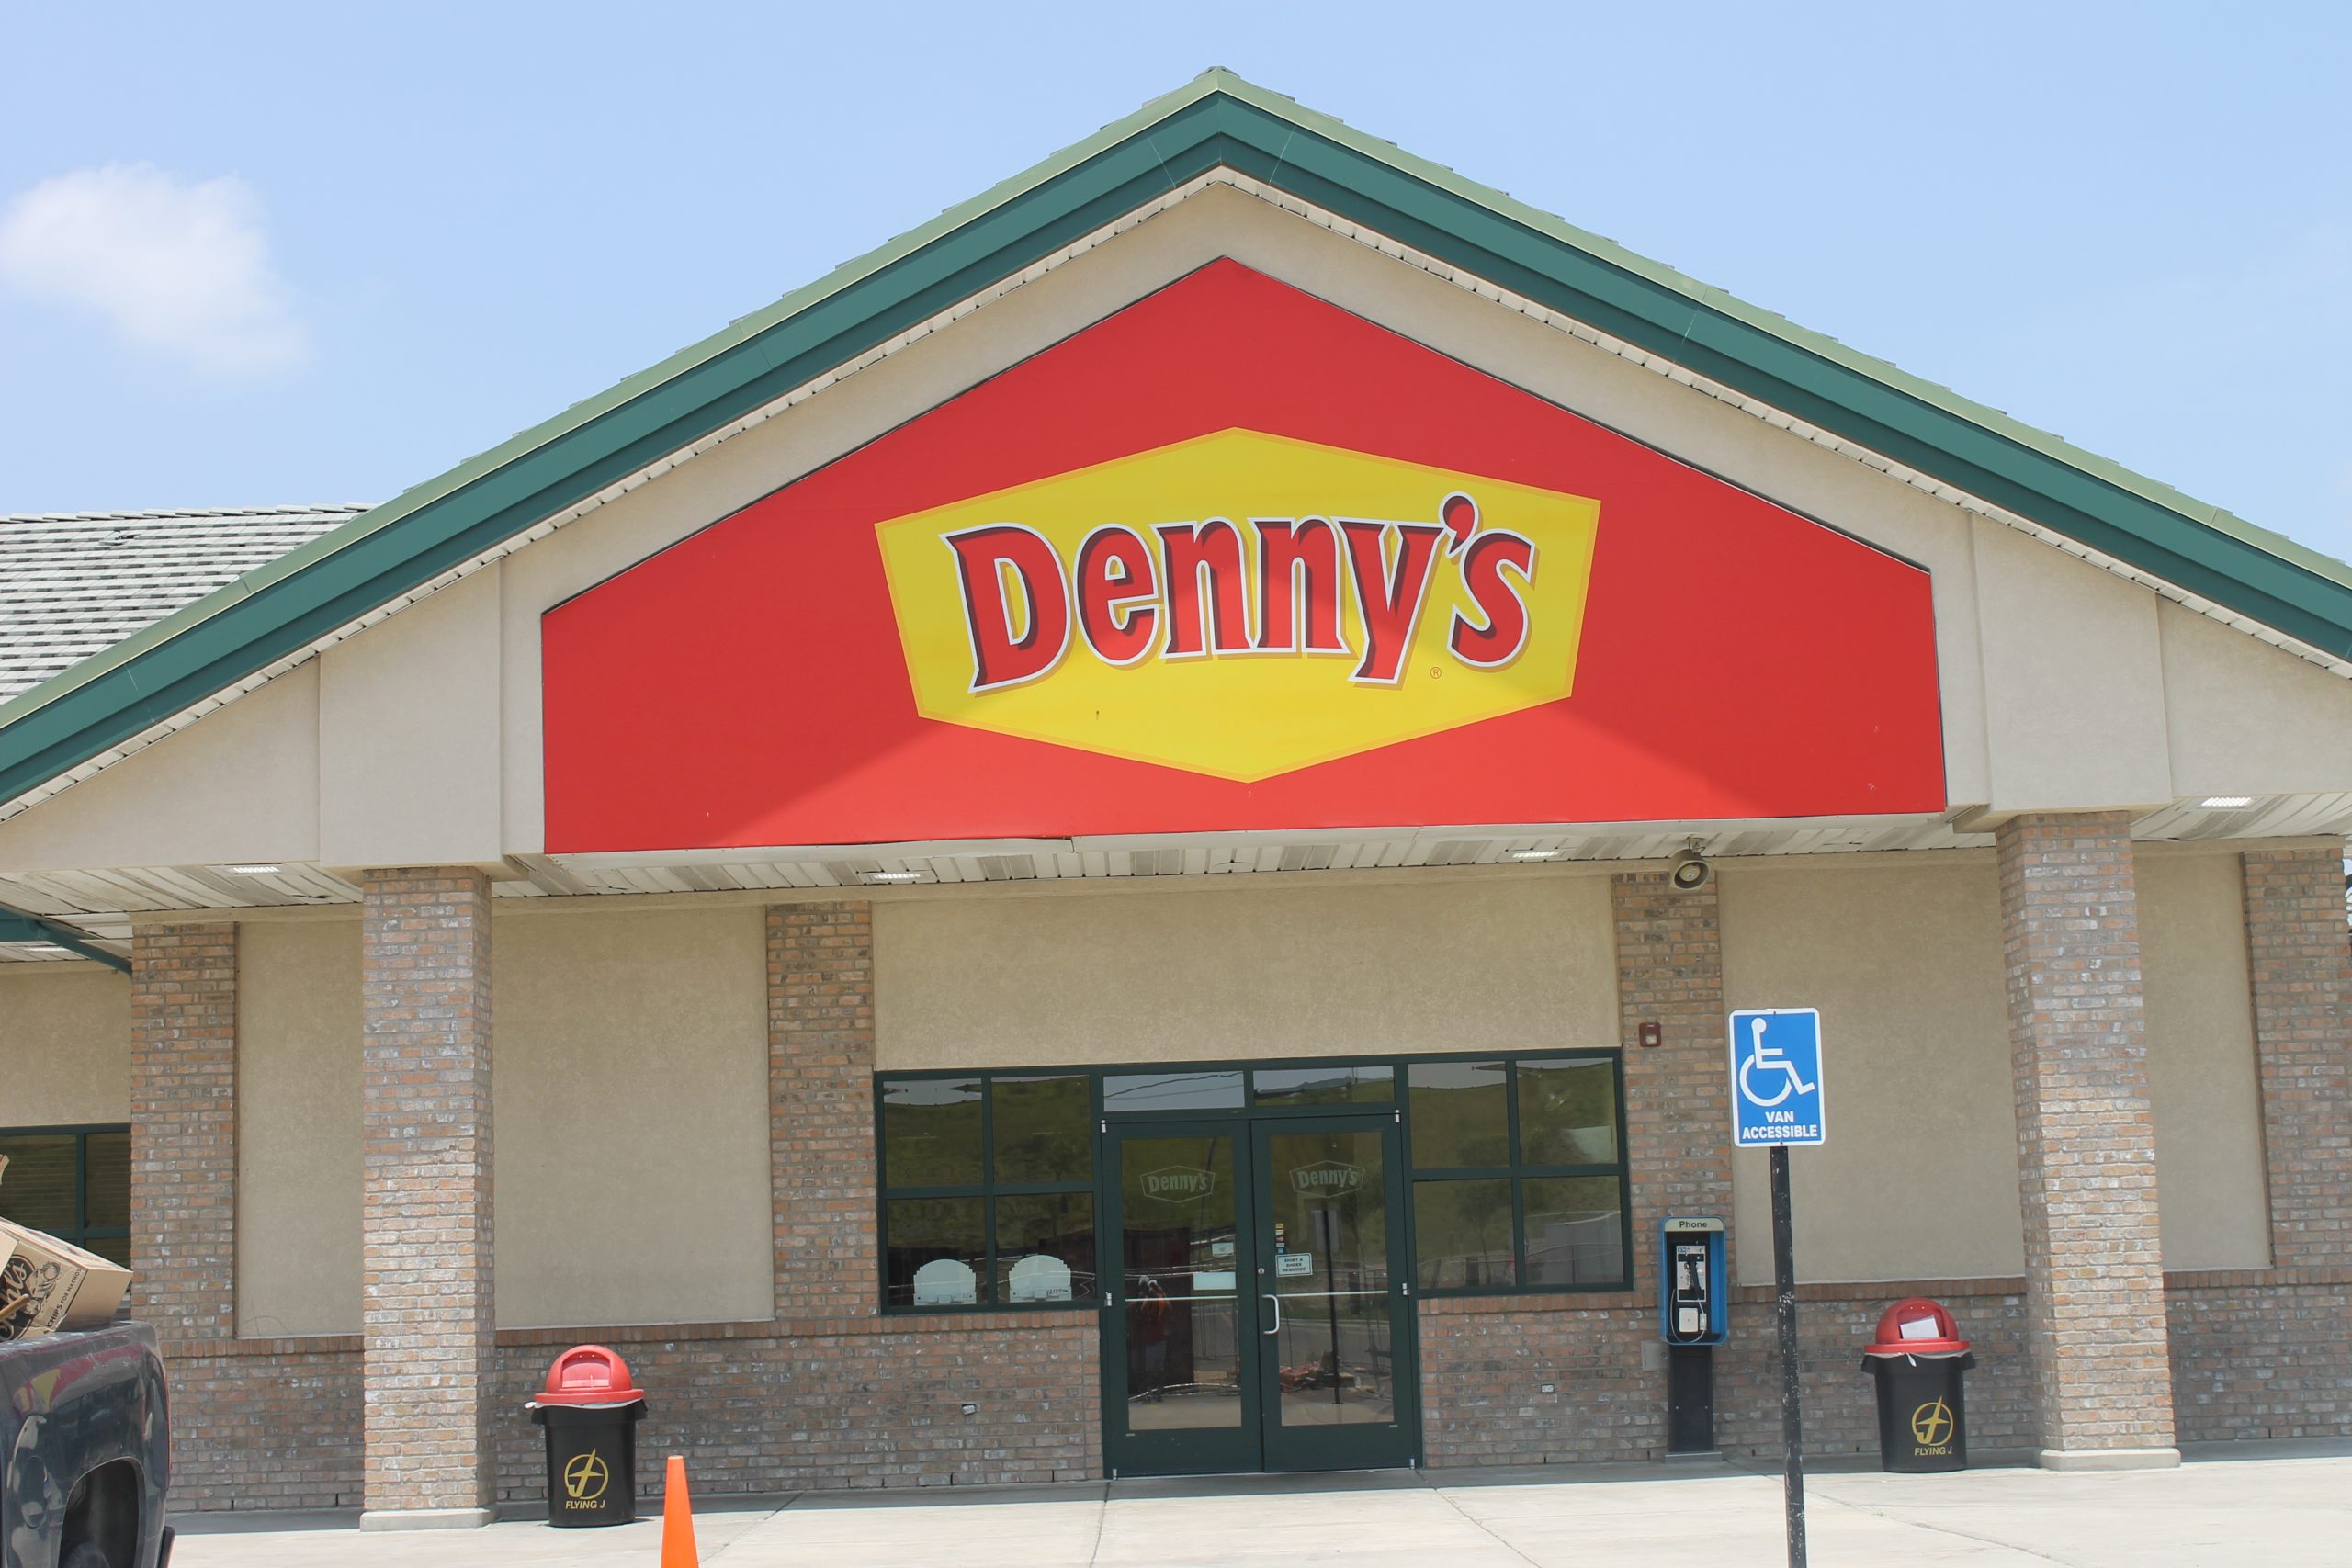 Denny’s Restaurant #8069, Five Cities Dr. EBT Restaurant